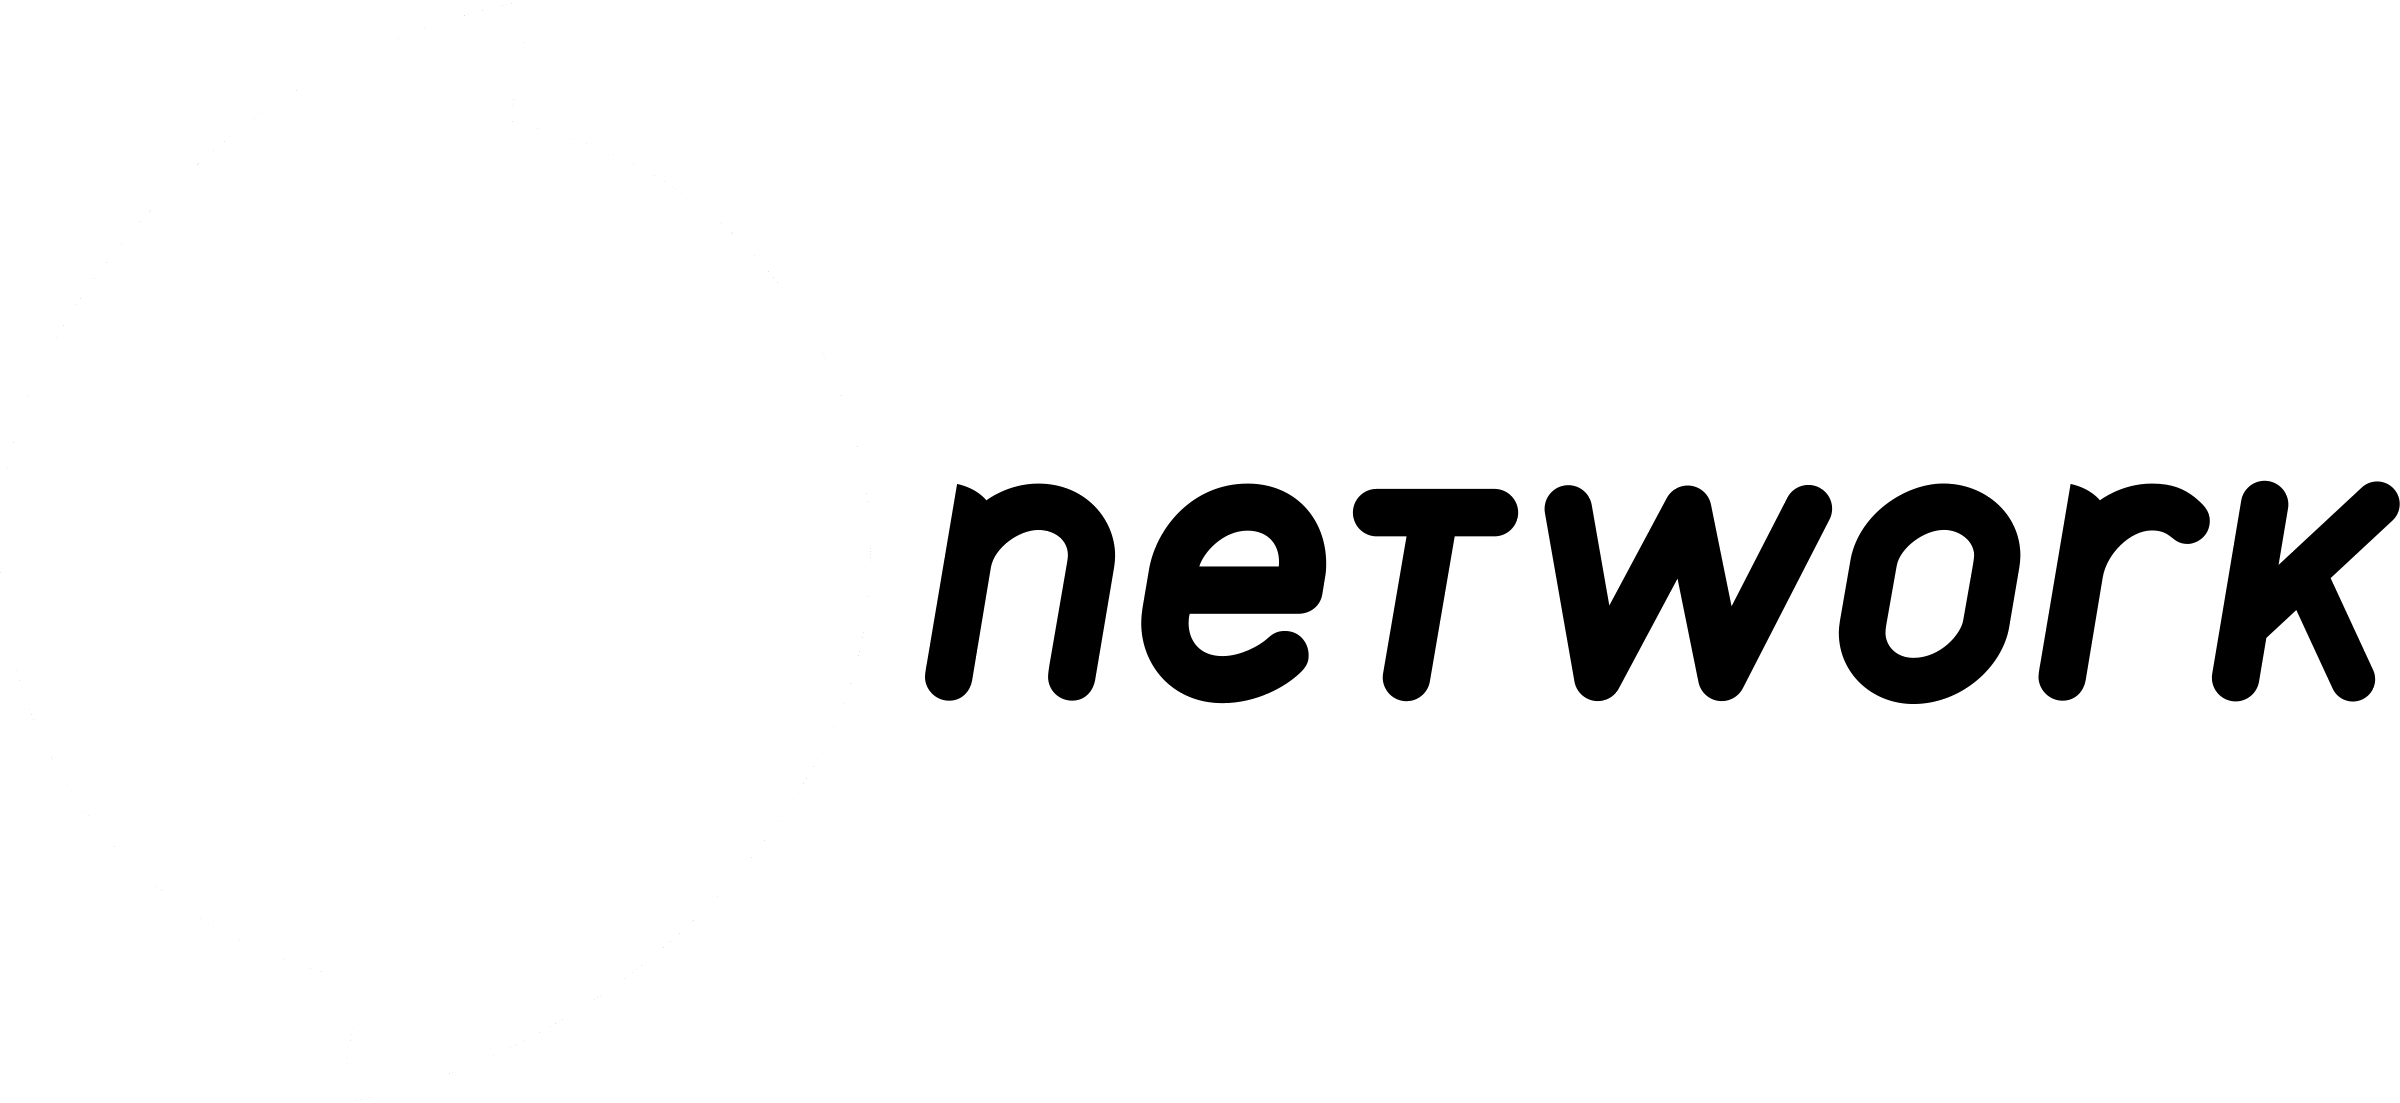 Hub Network Logo - Hub Network Logo PNG Transparent & SVG Vector